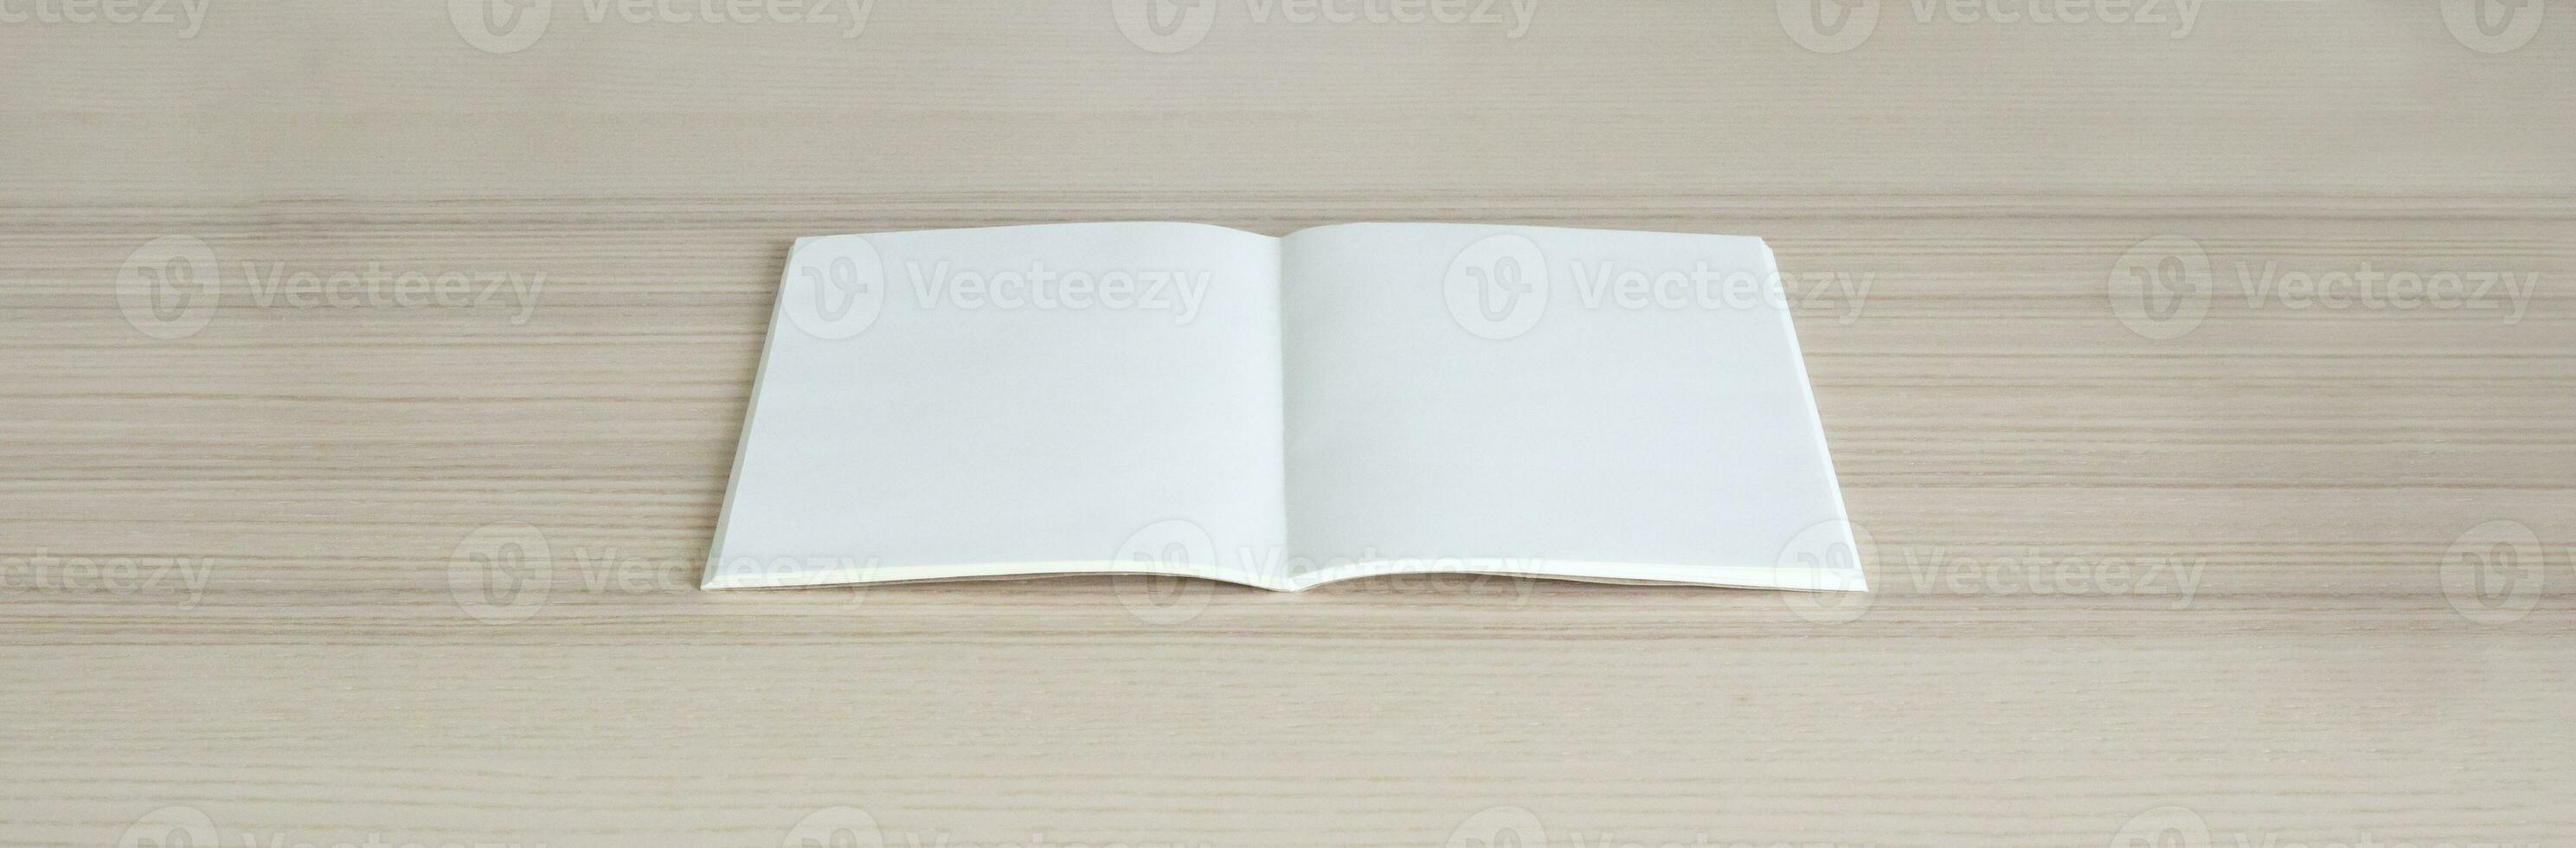 falsk upp tom öppen papper bok på trä tabell bakgrund foto